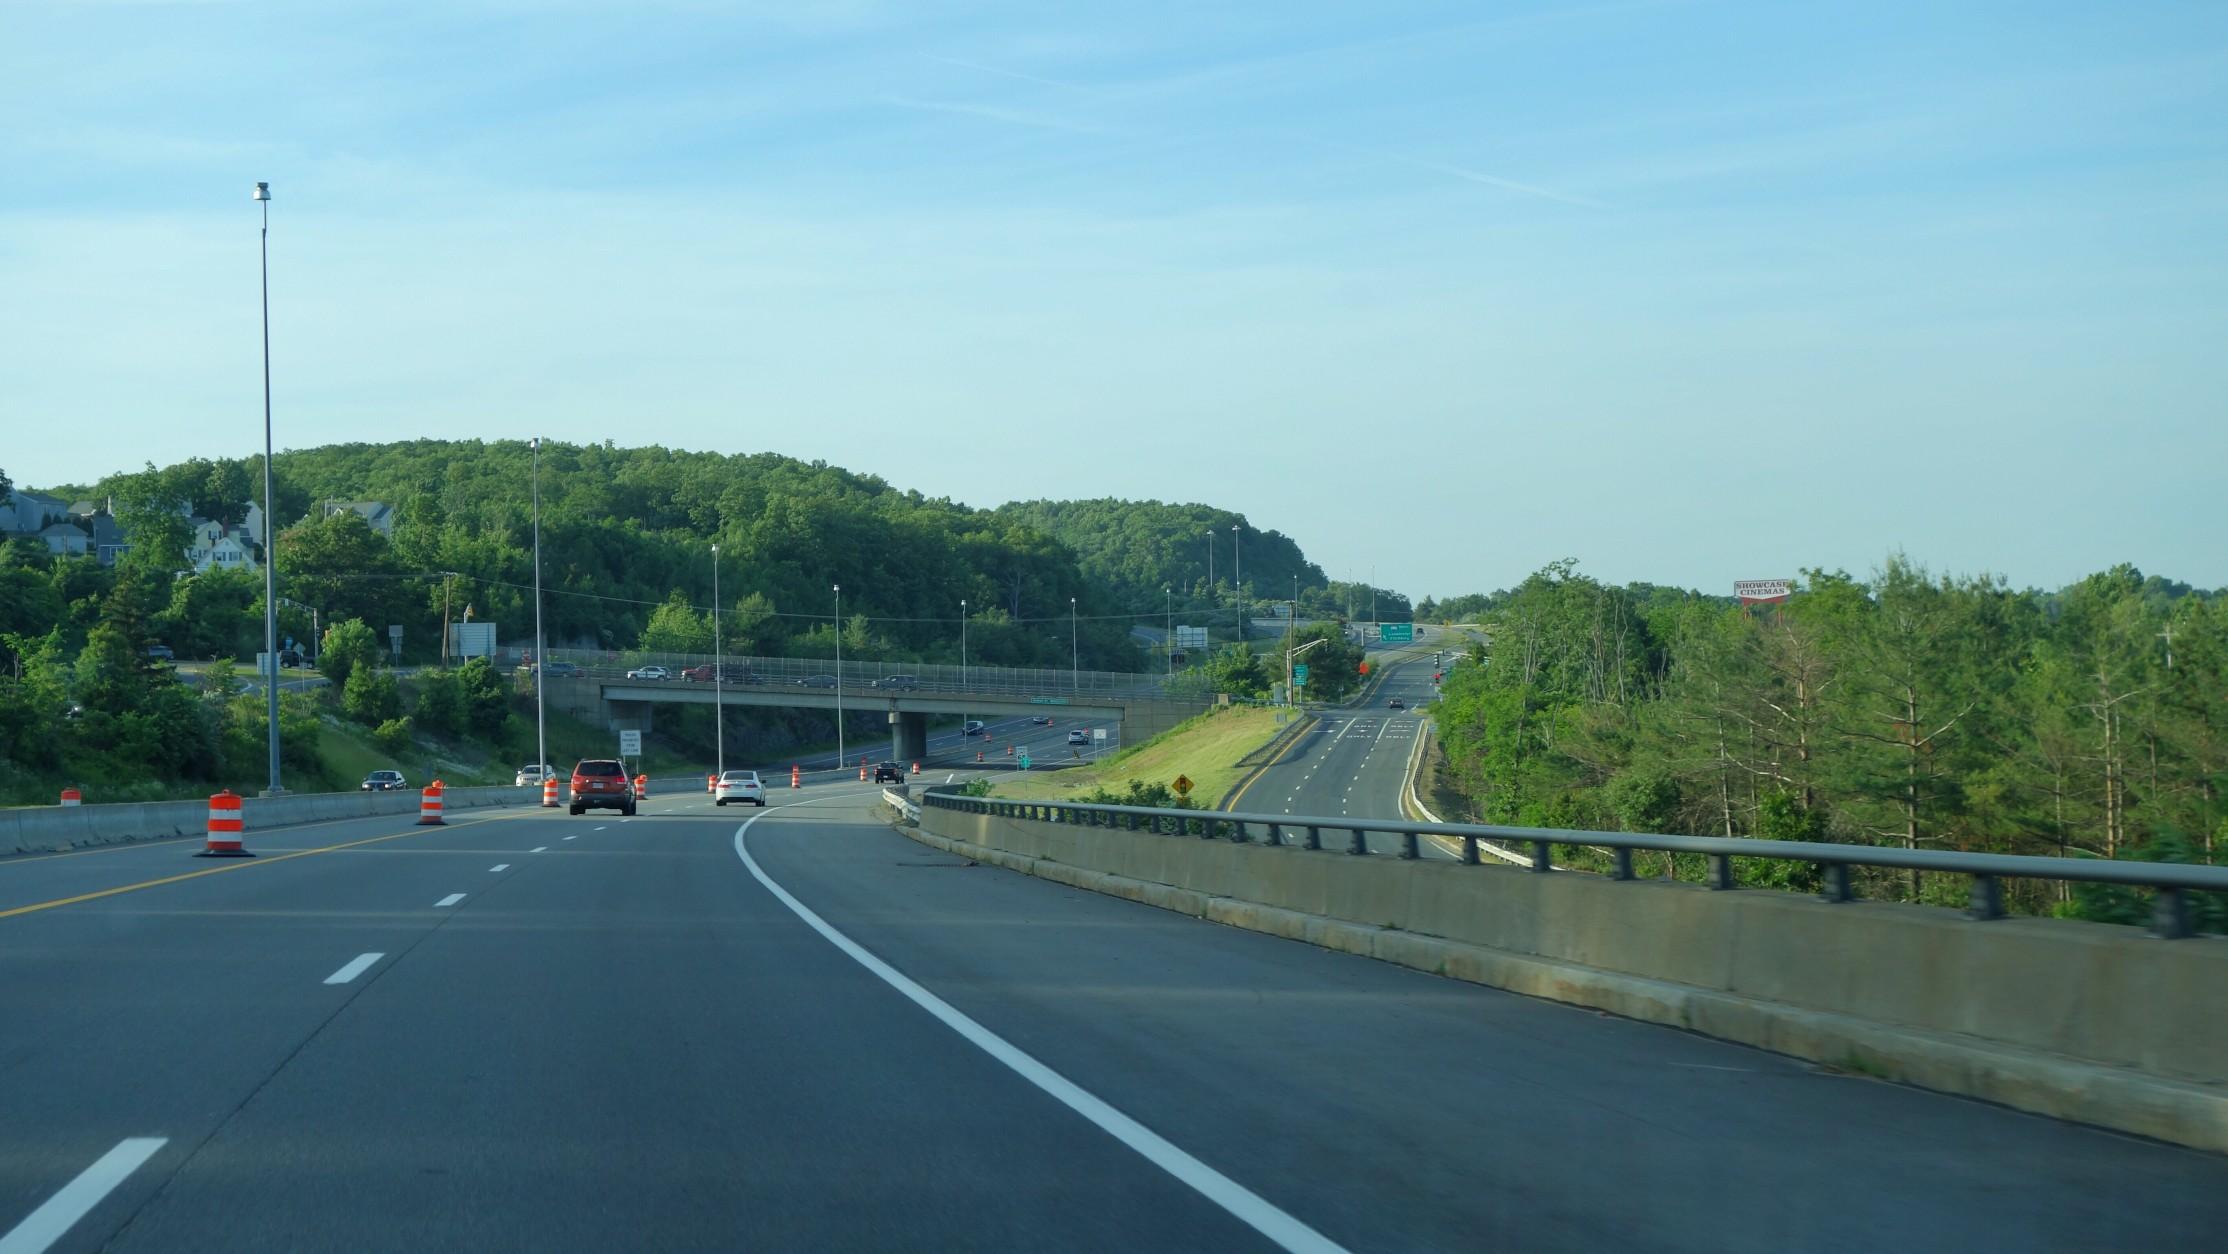 Cars speeding down a Massachusetts highway | Twenty20